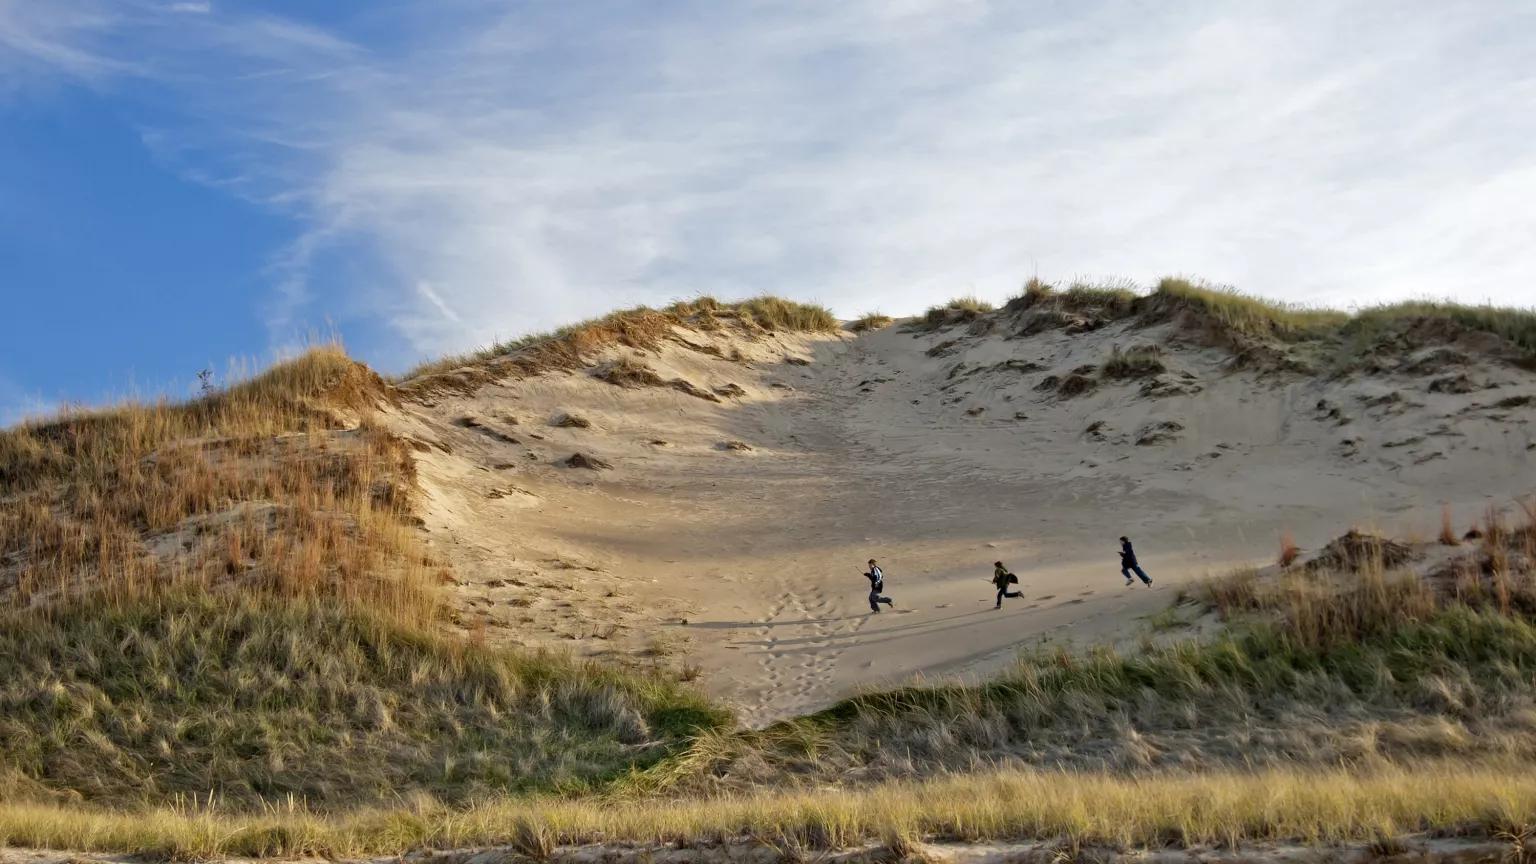 Three children run across a high sand dune with tall grasses